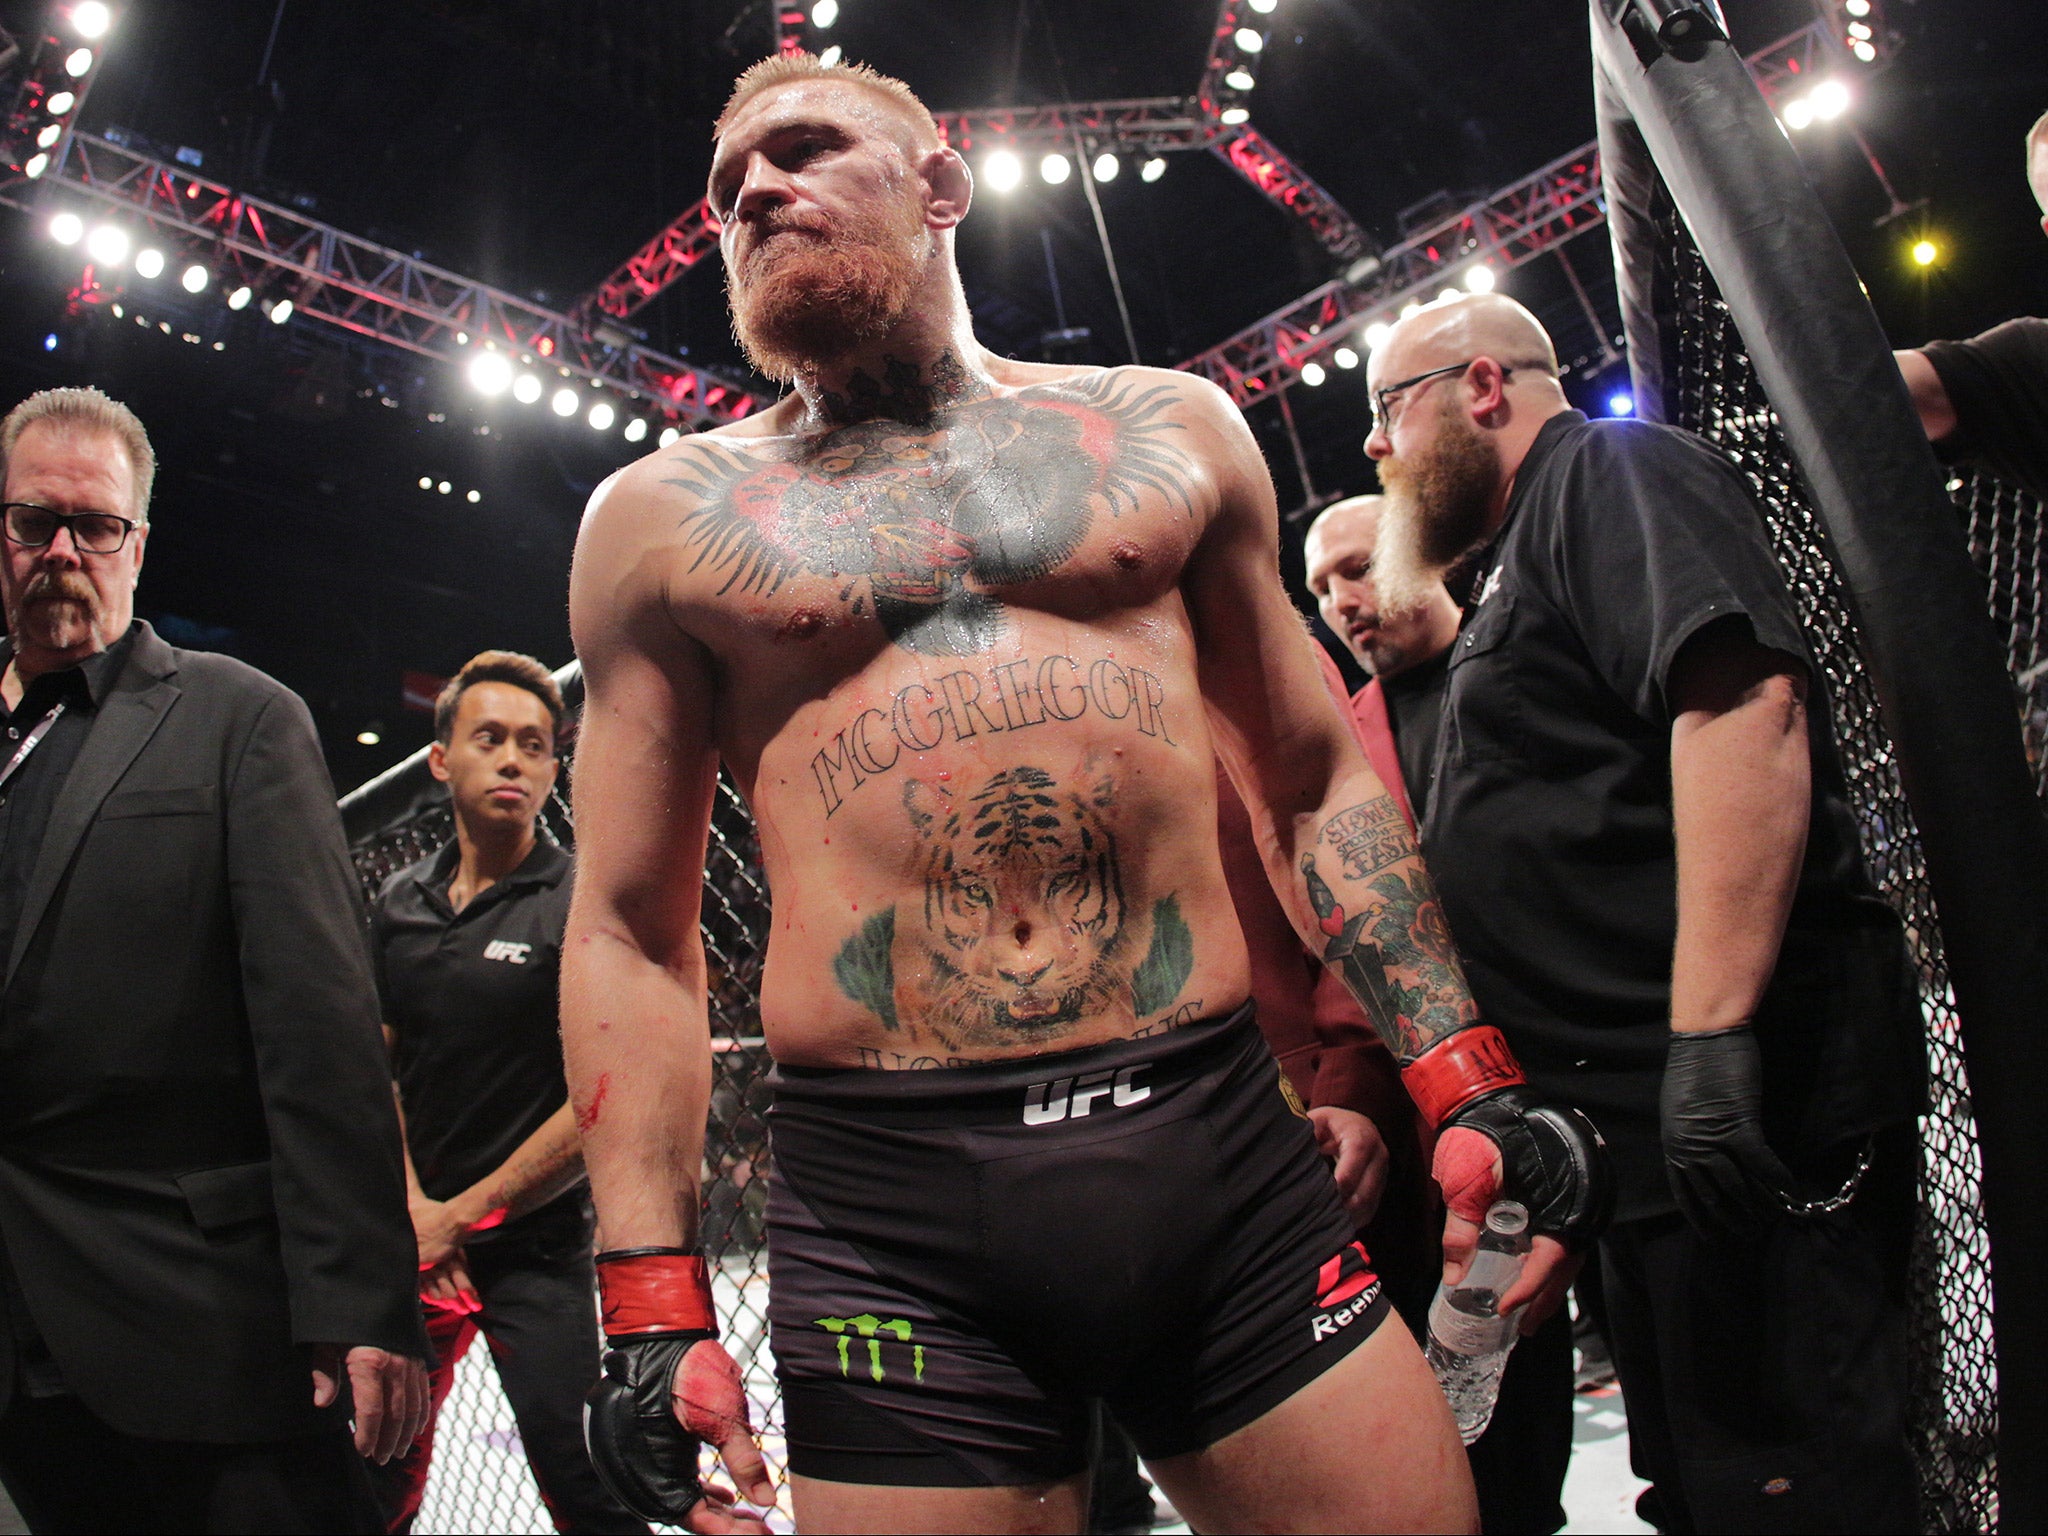 Conor McGregor will fight Nate Diaz at UFC 200